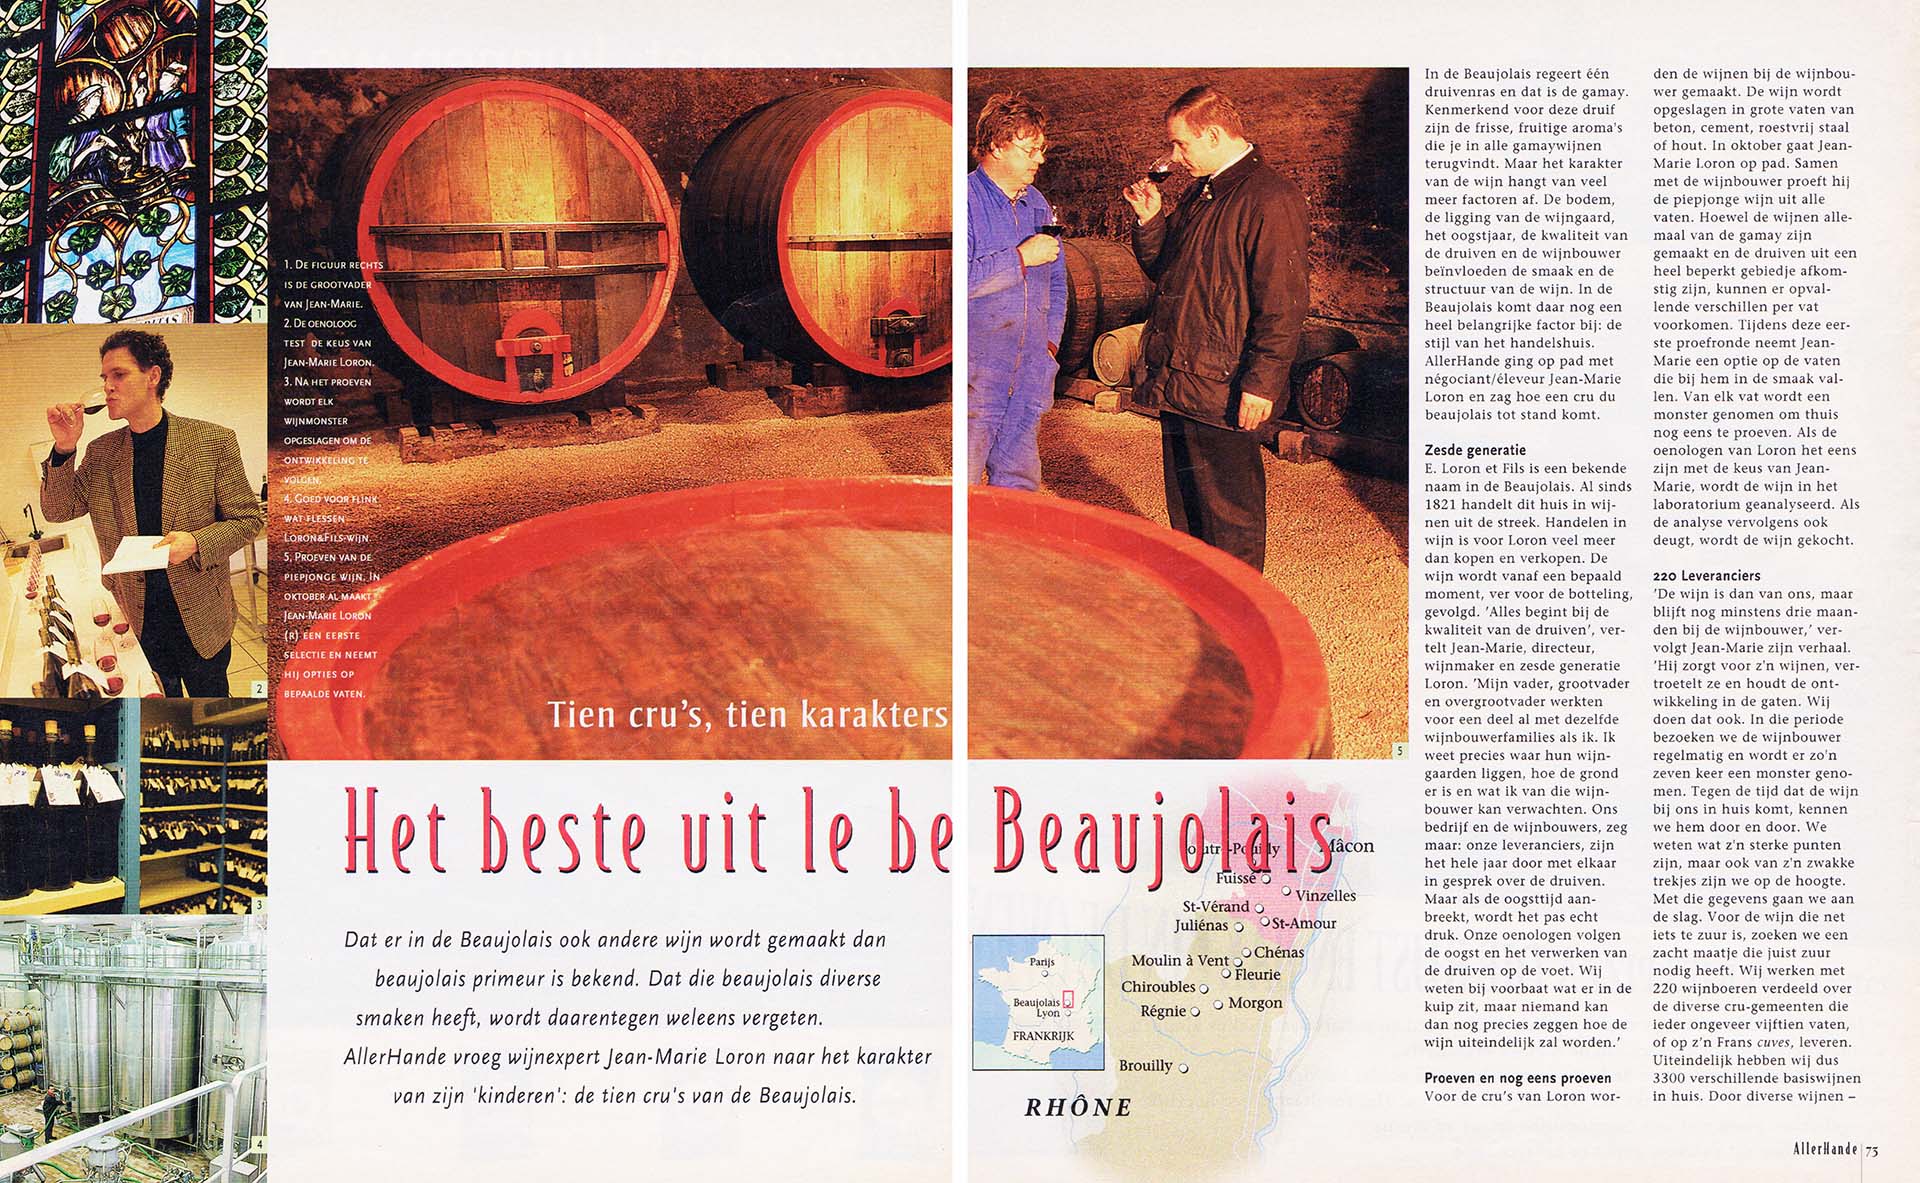 Reportage over Beaujolais wijnen.